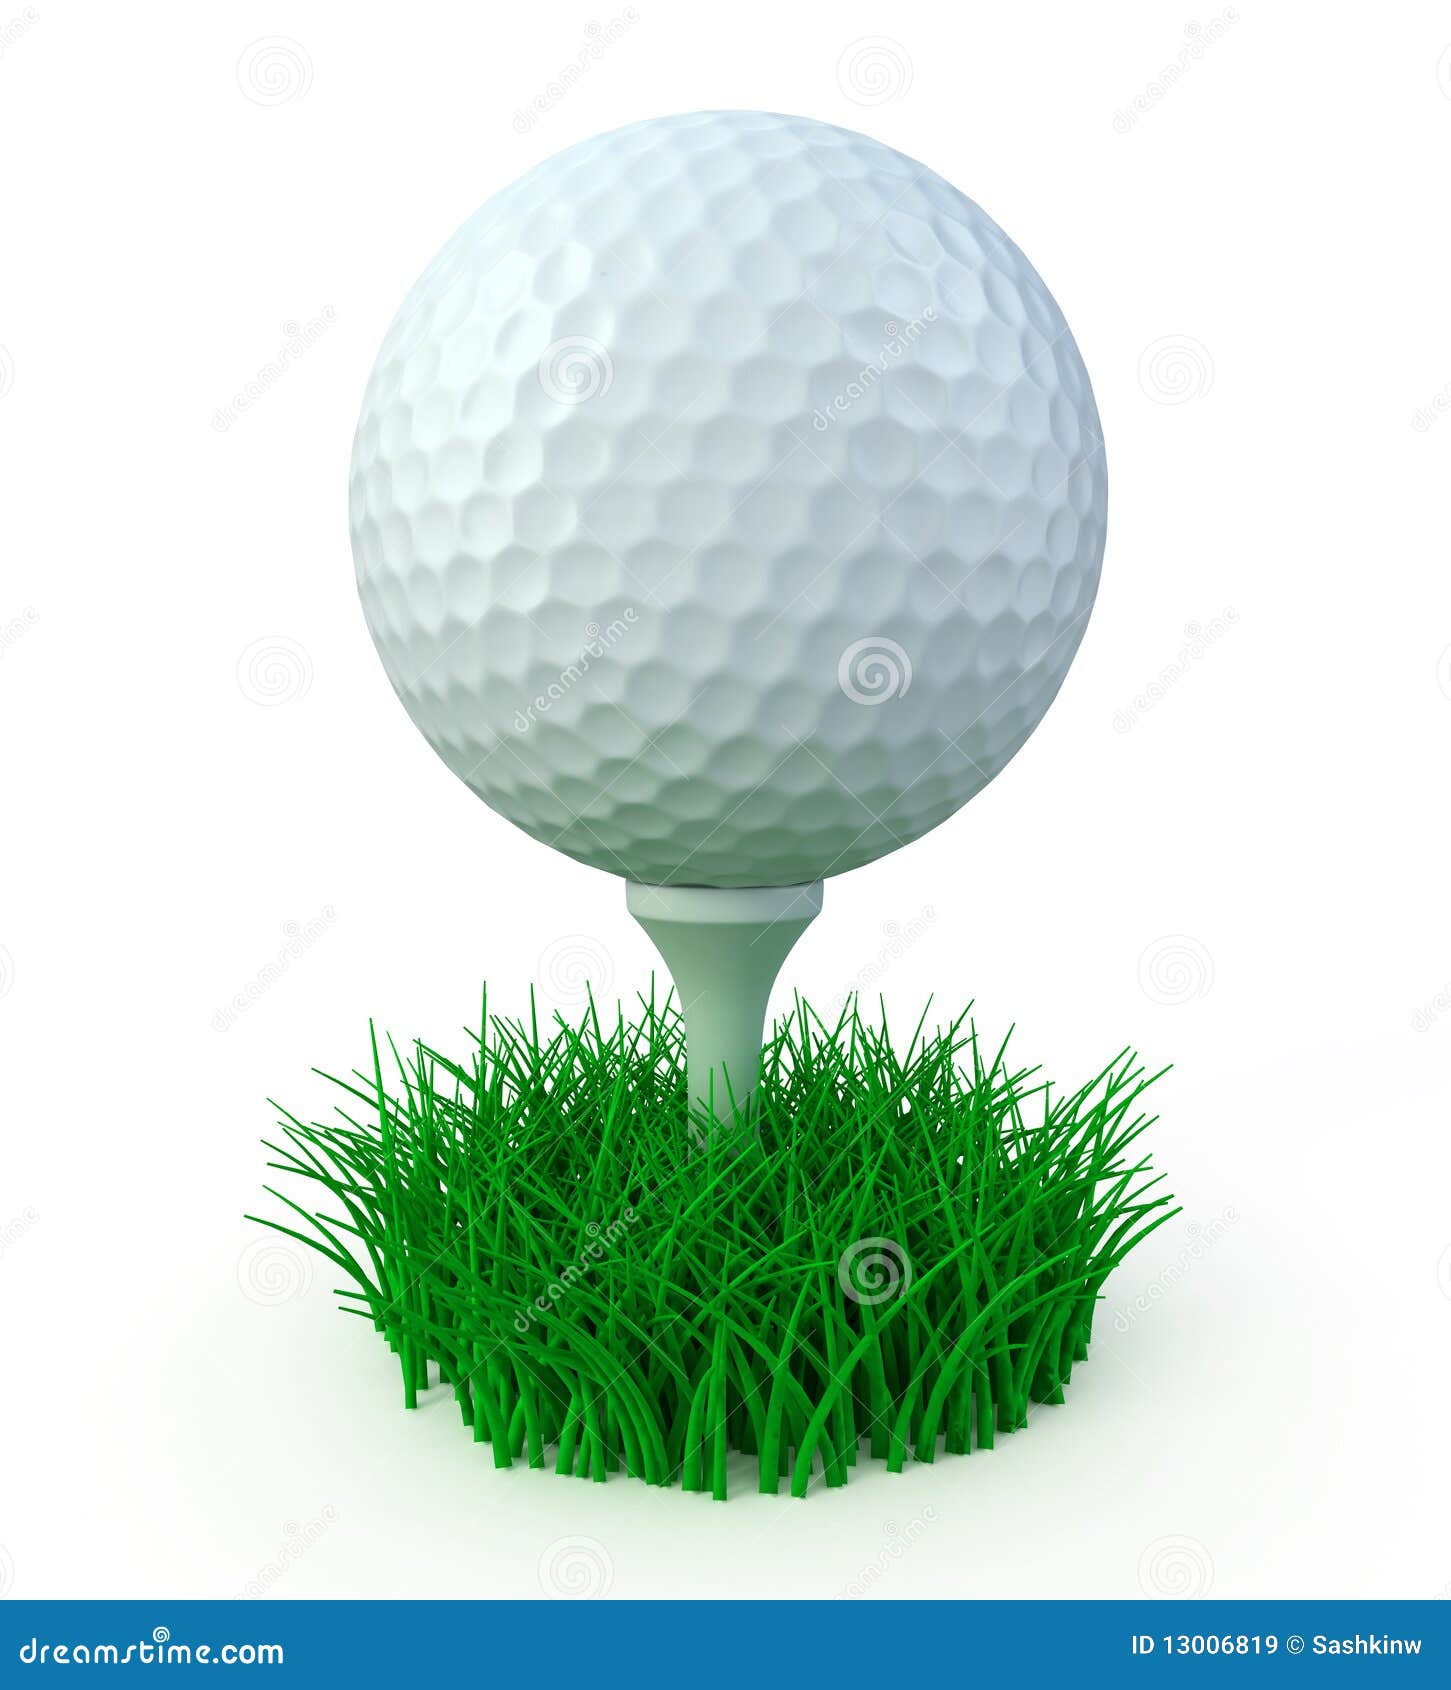 clipart golf balls - photo #48